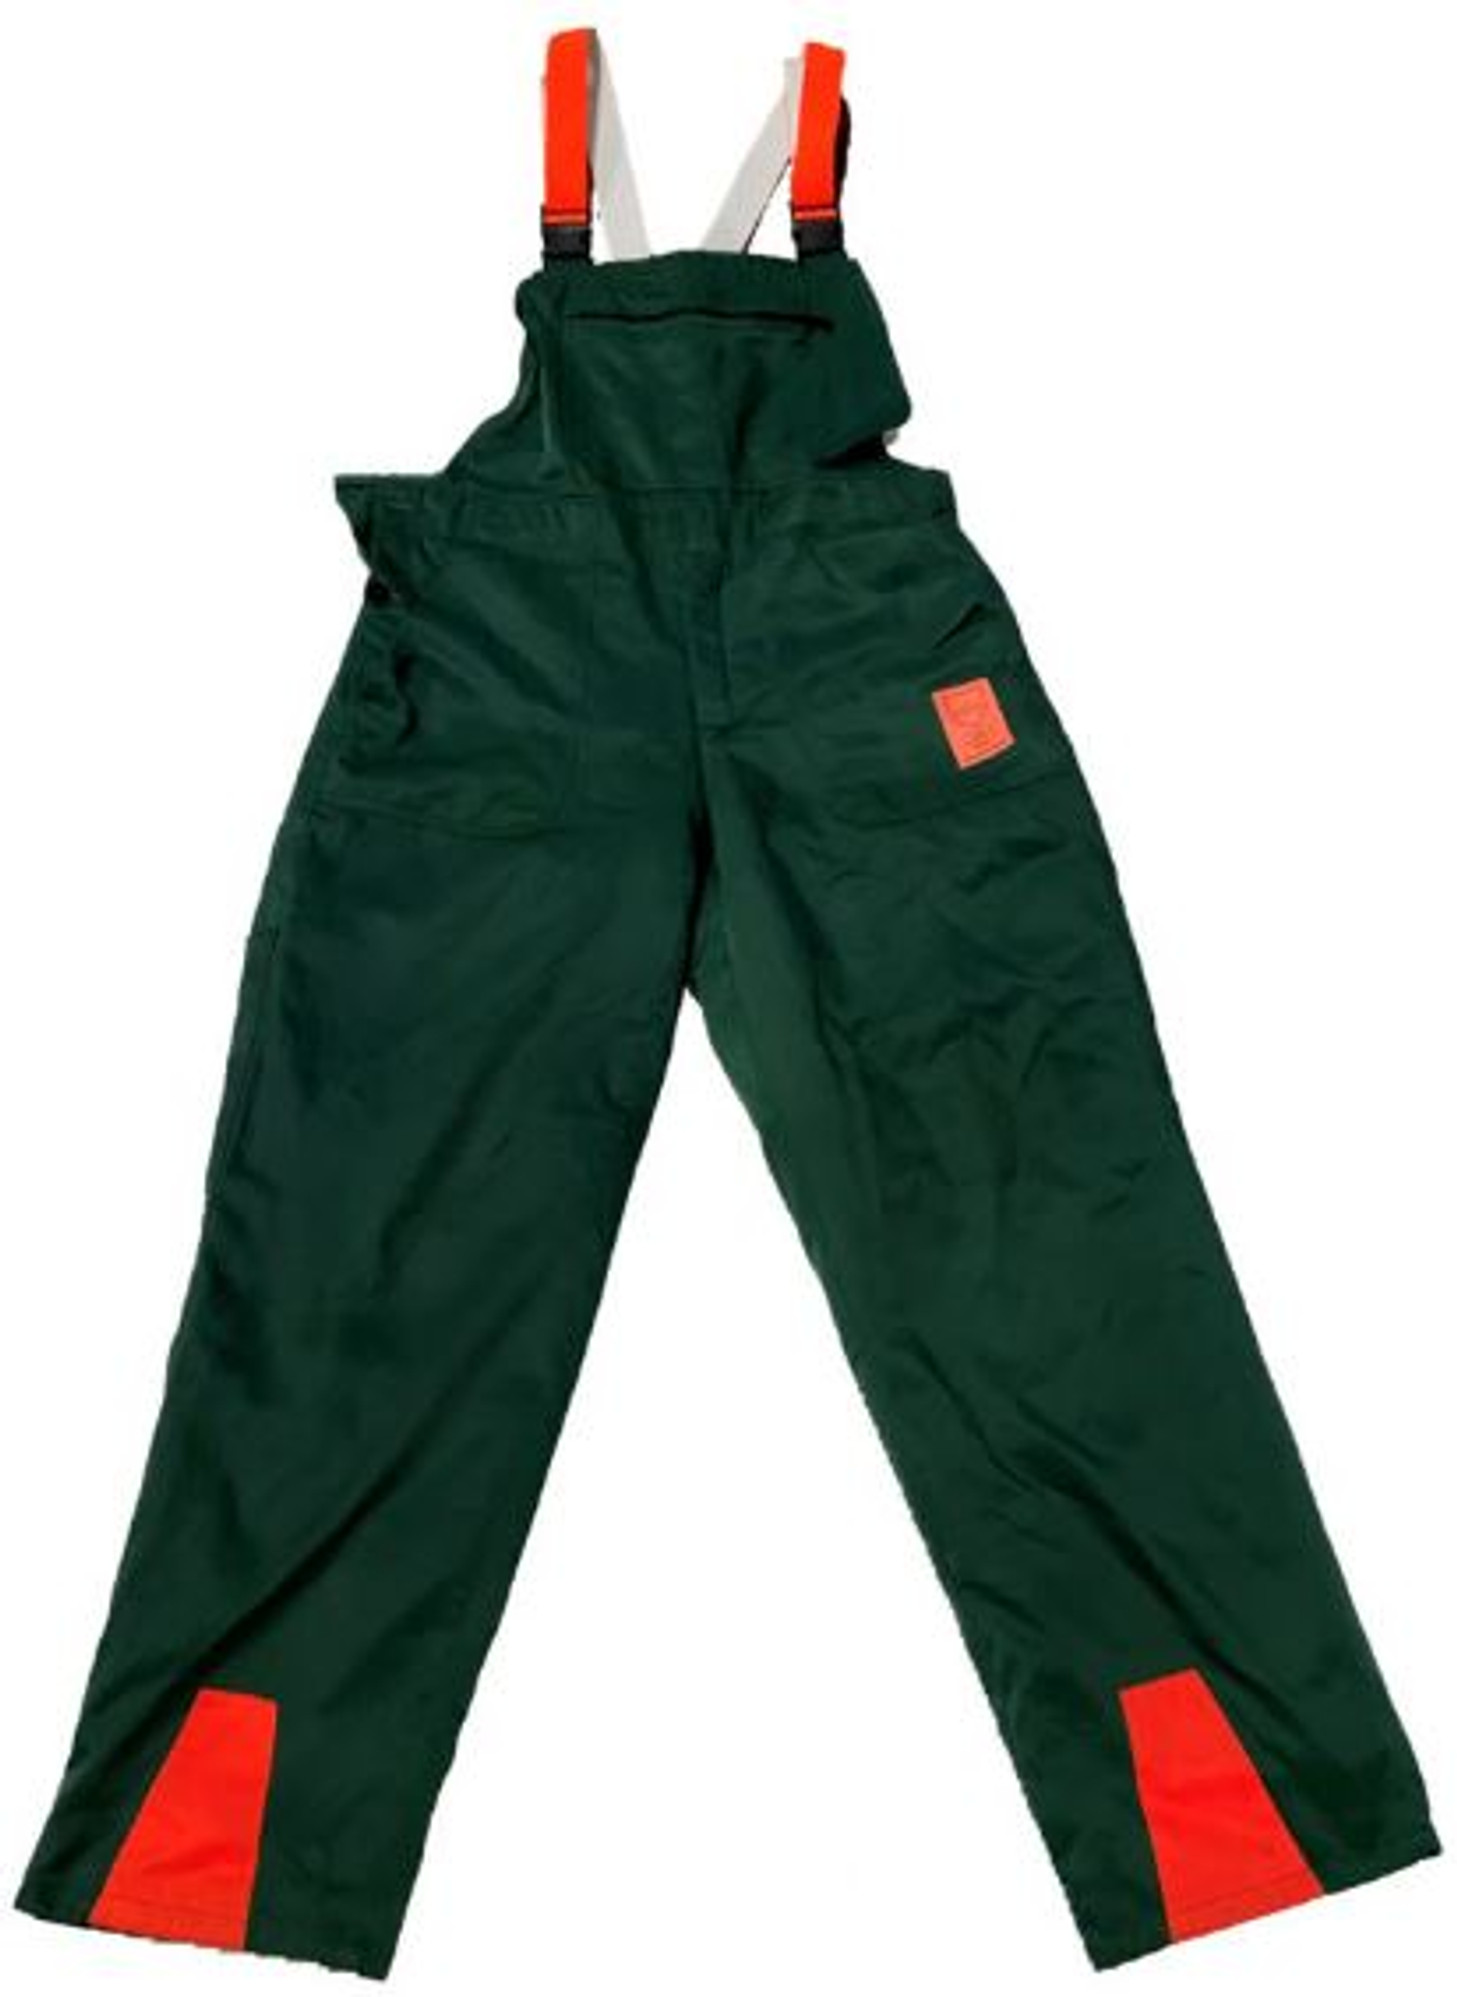 German Armed Forces Green Cut Resistant Pants W/Flap